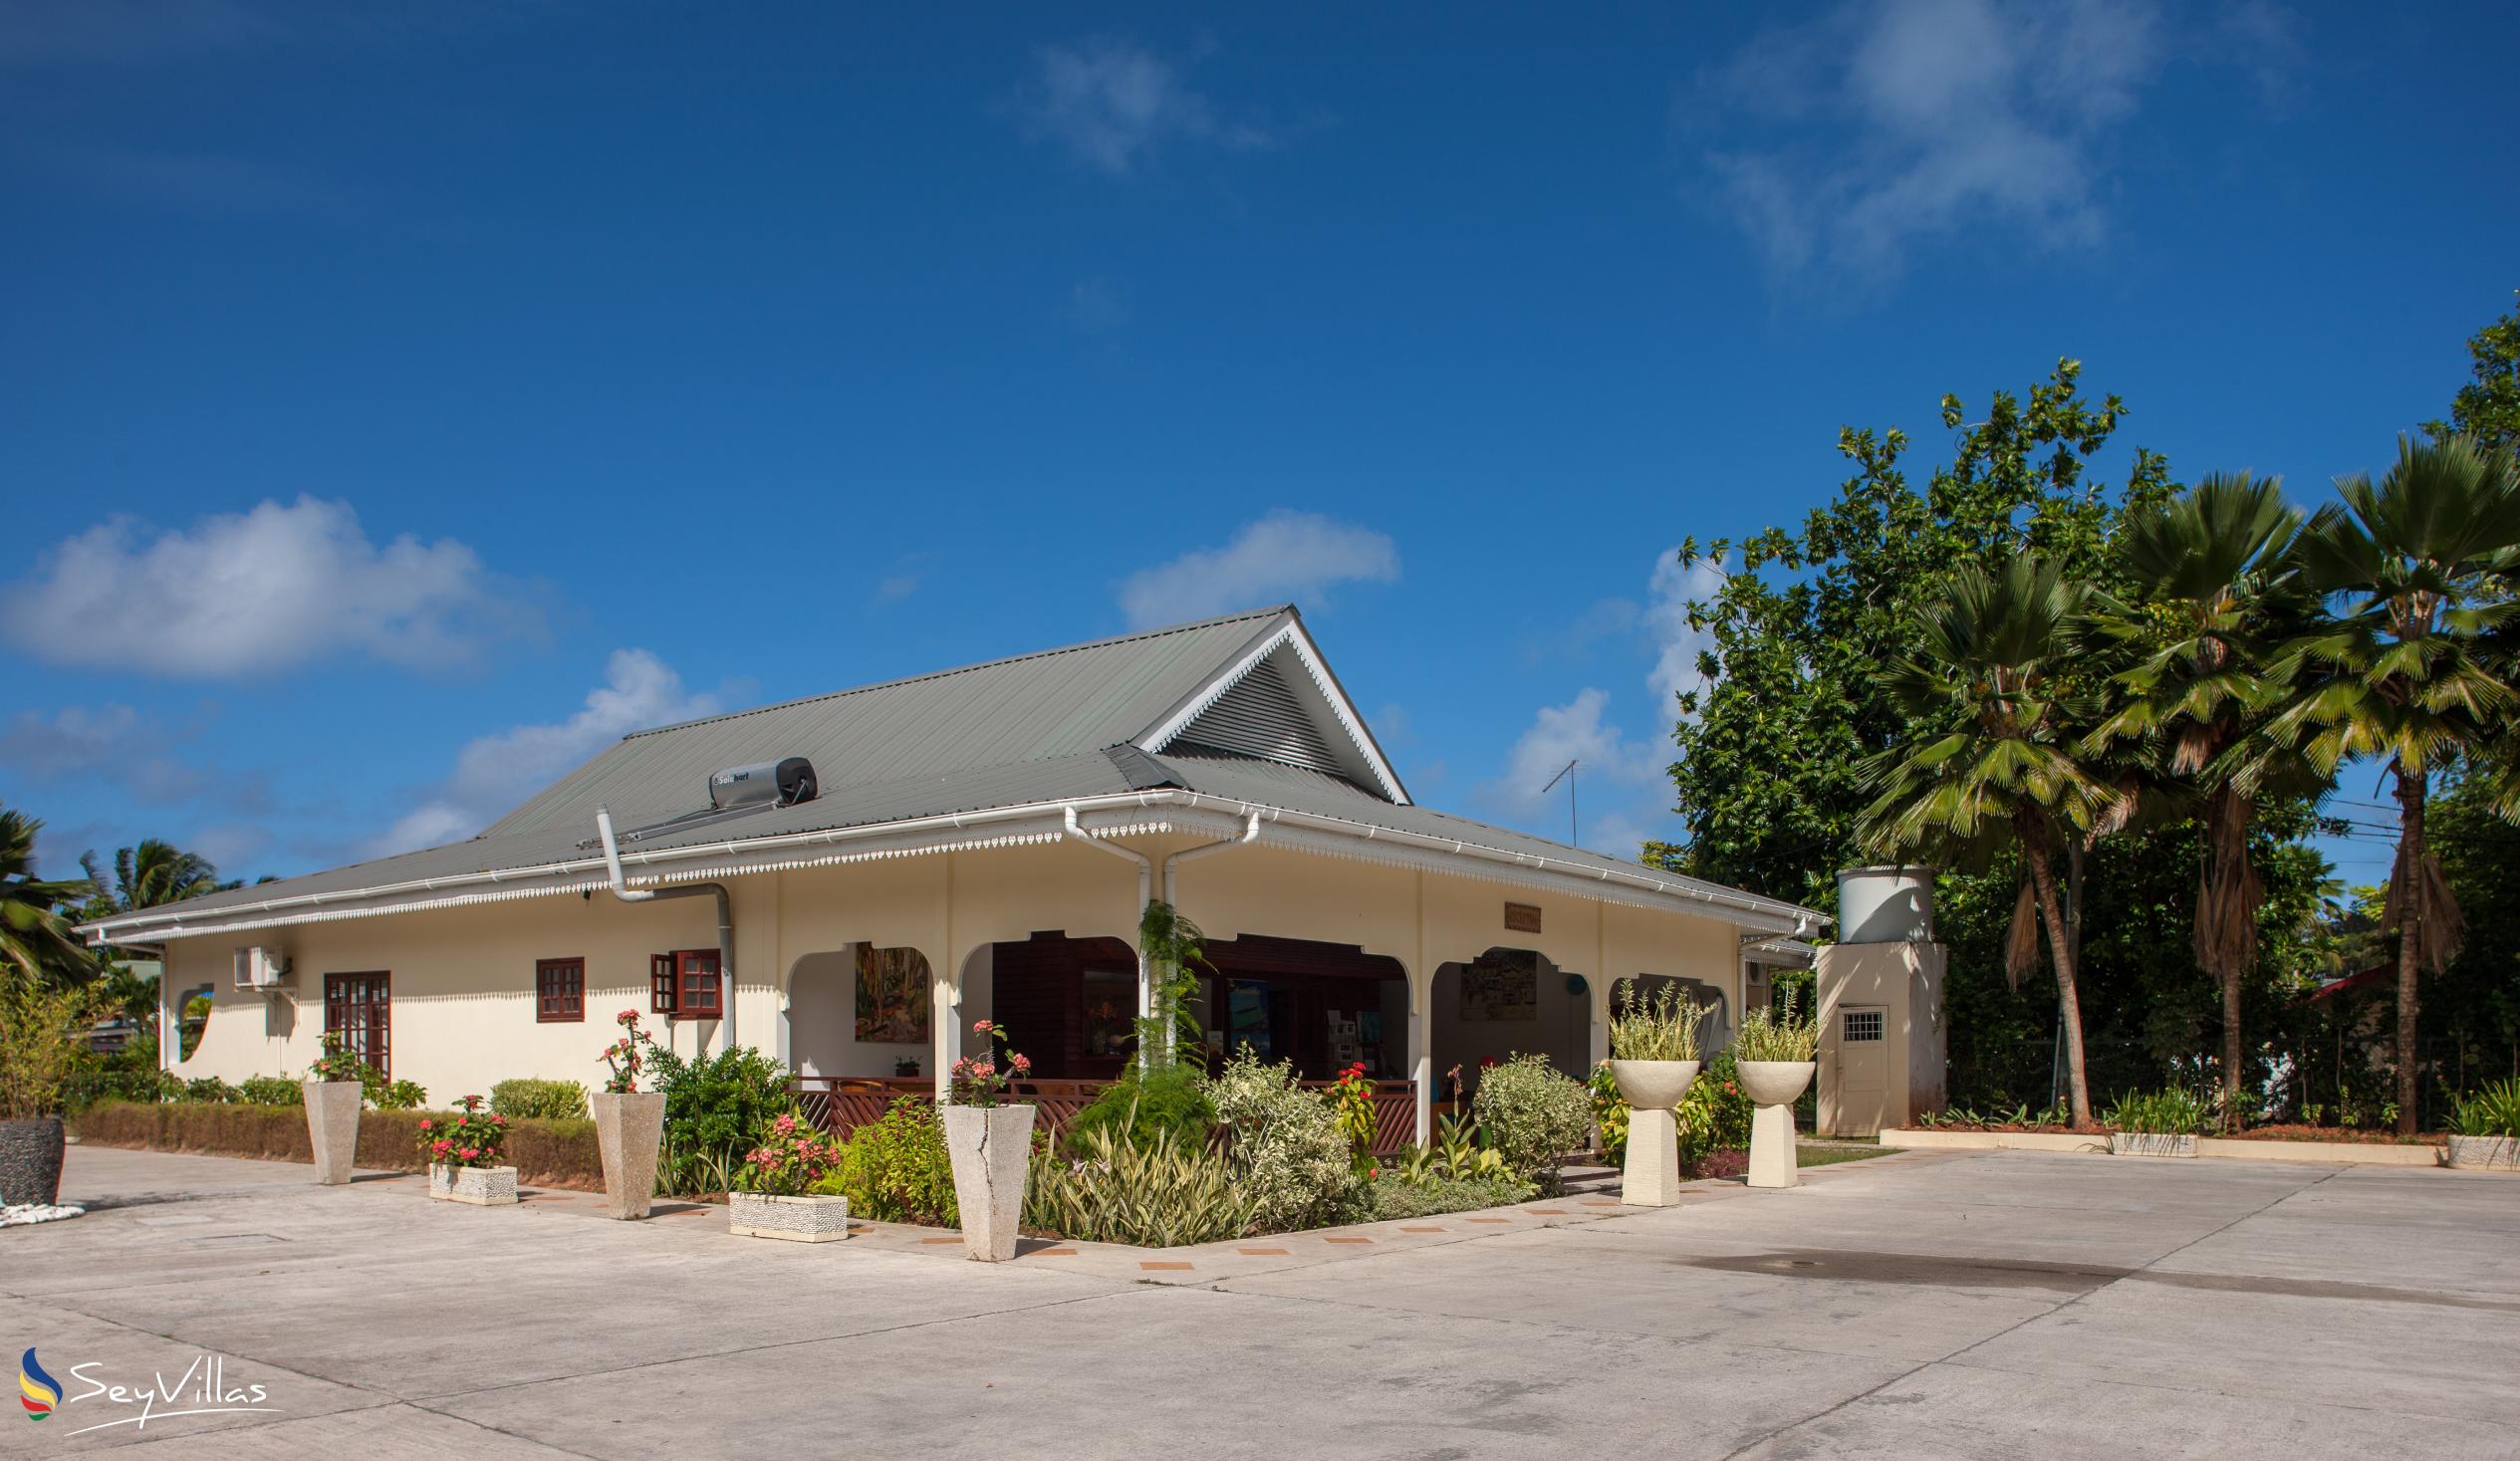 Foto 11: Villas de Mer - Aussenbereich - Praslin (Seychellen)